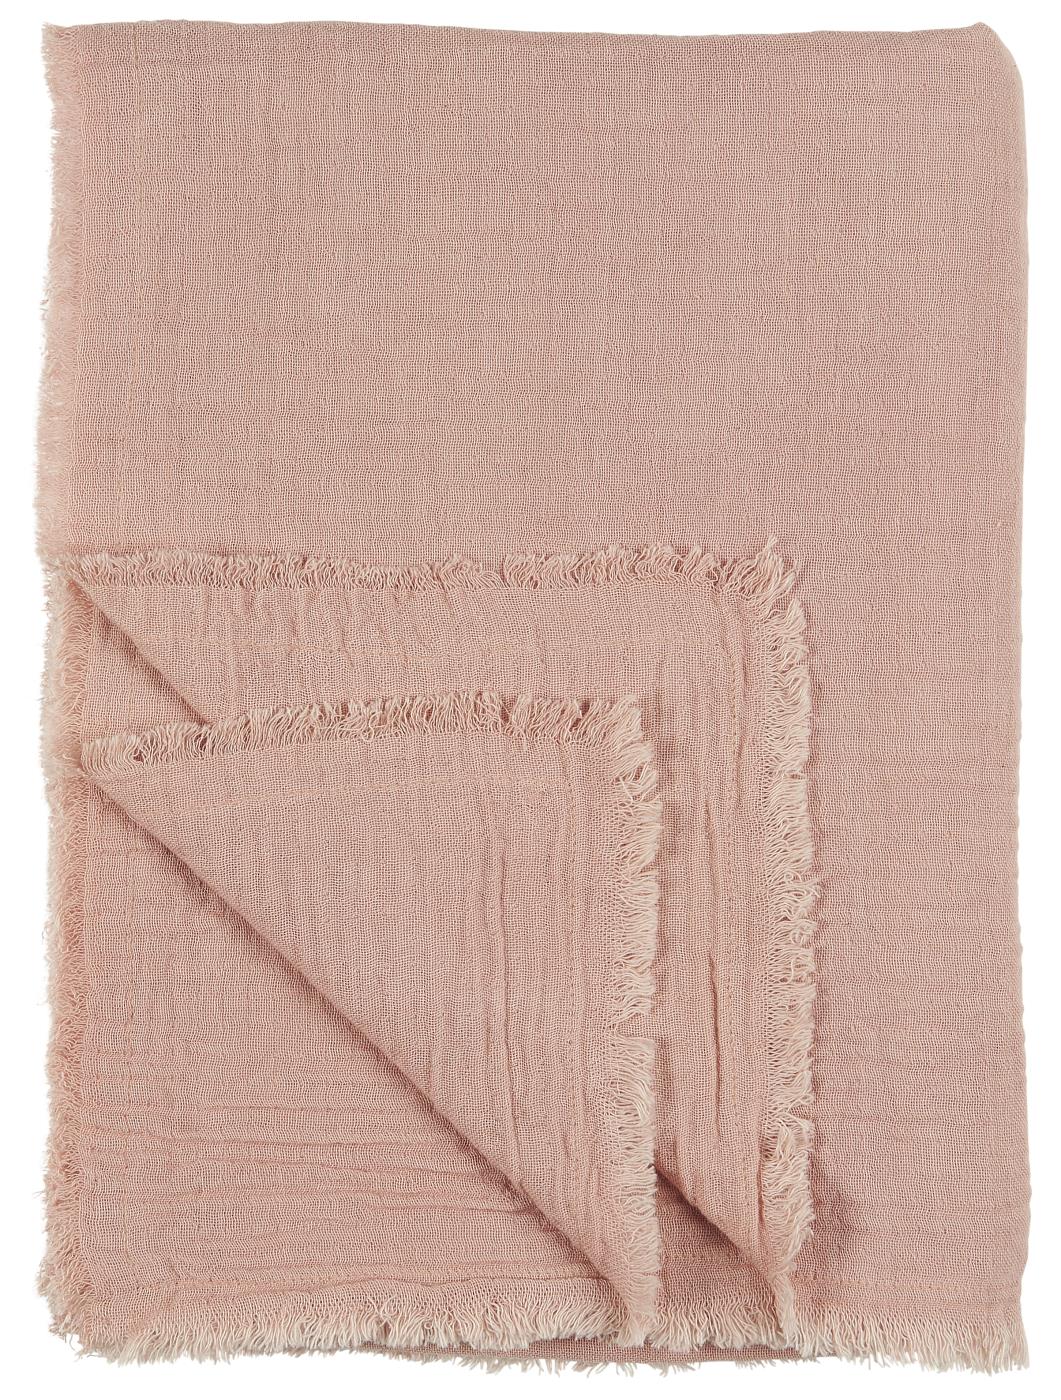 Tischdecke / Plaid doppelt gewebt, rosa 130 x 170cm